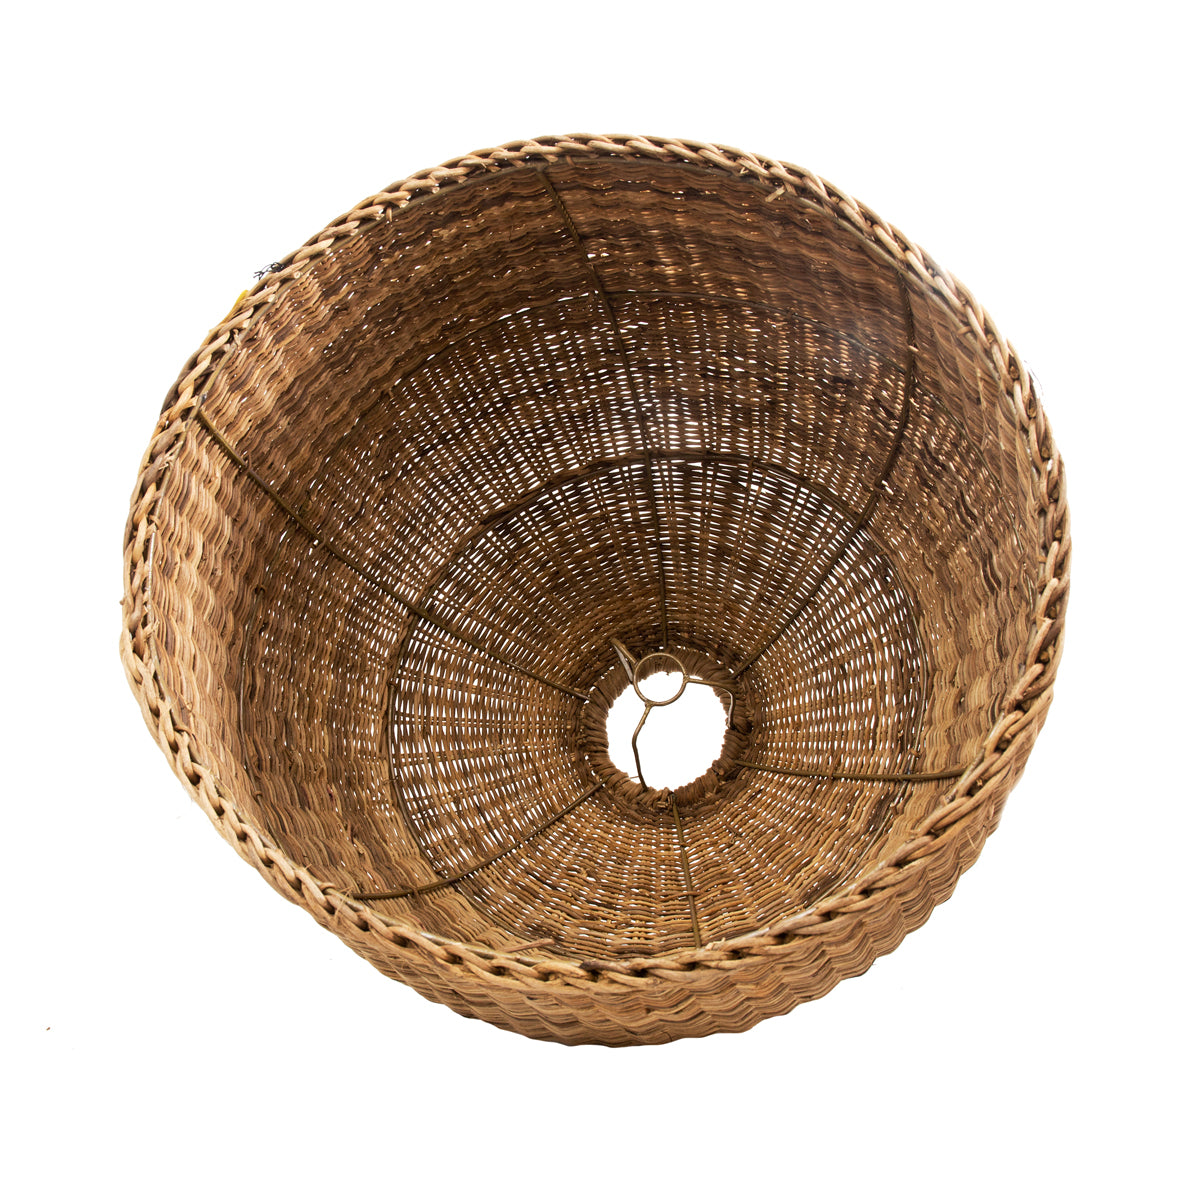 Malawi Cane Hand Woven Lamp Shade - S 101